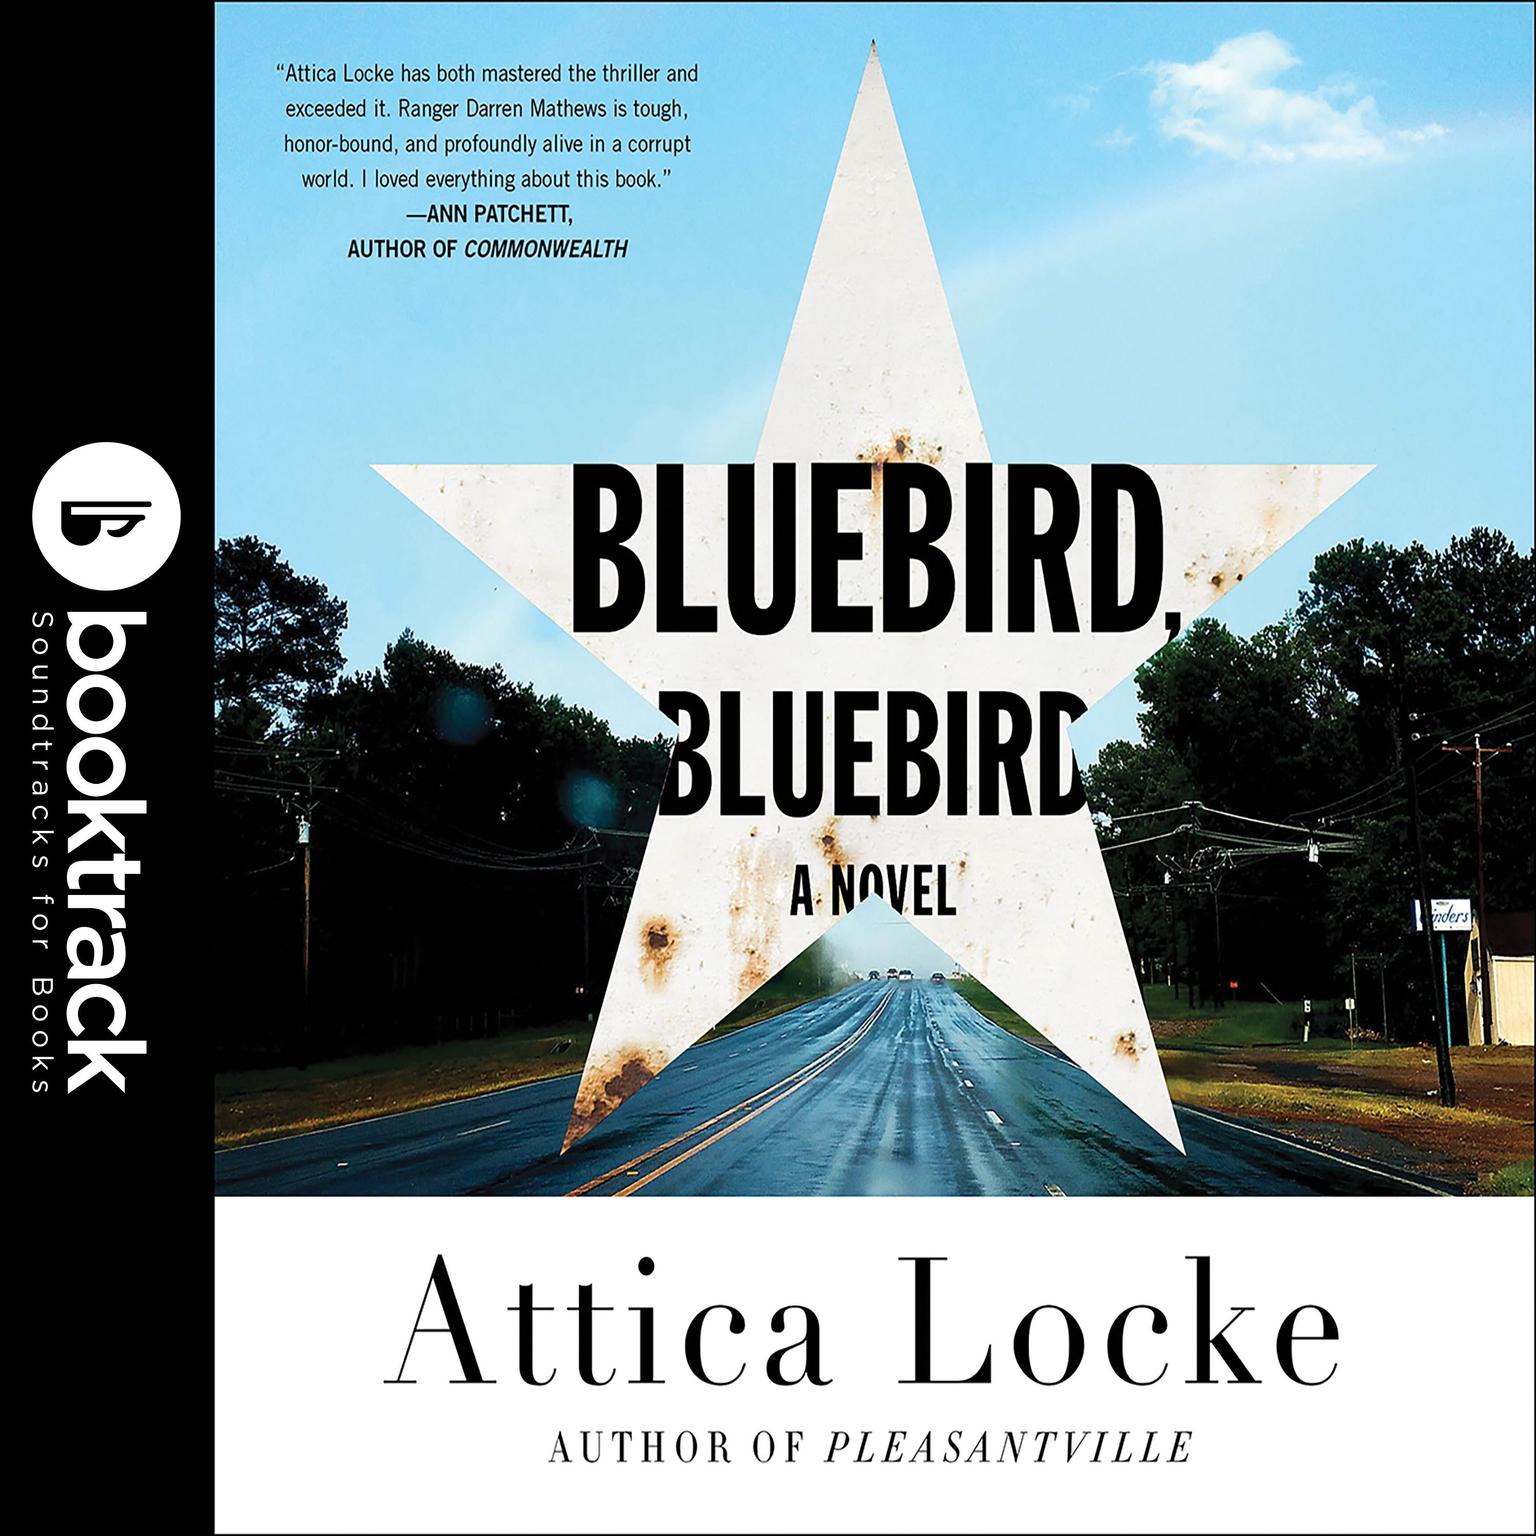 Bluebird, Bluebird Audiobook, by Attica Locke